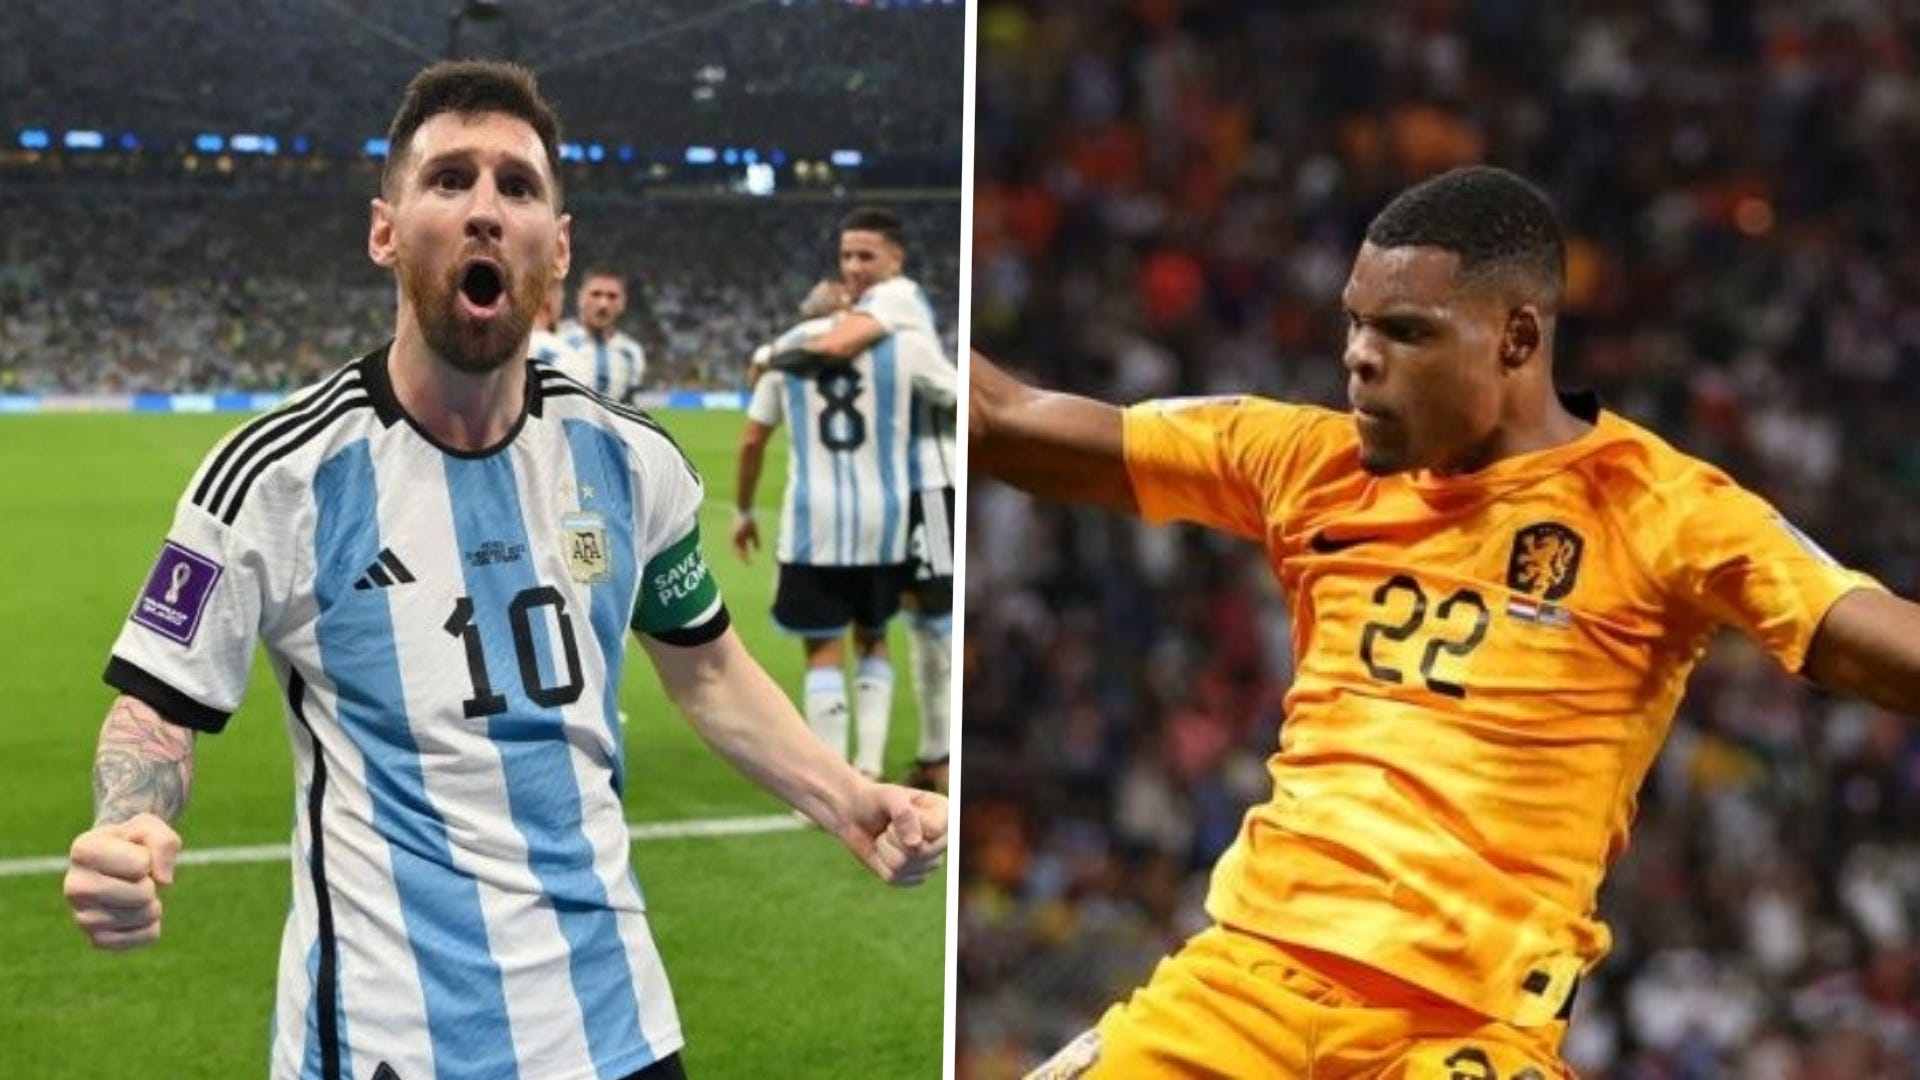 ¿Qué canal transmite la Copa Argentina hoy?